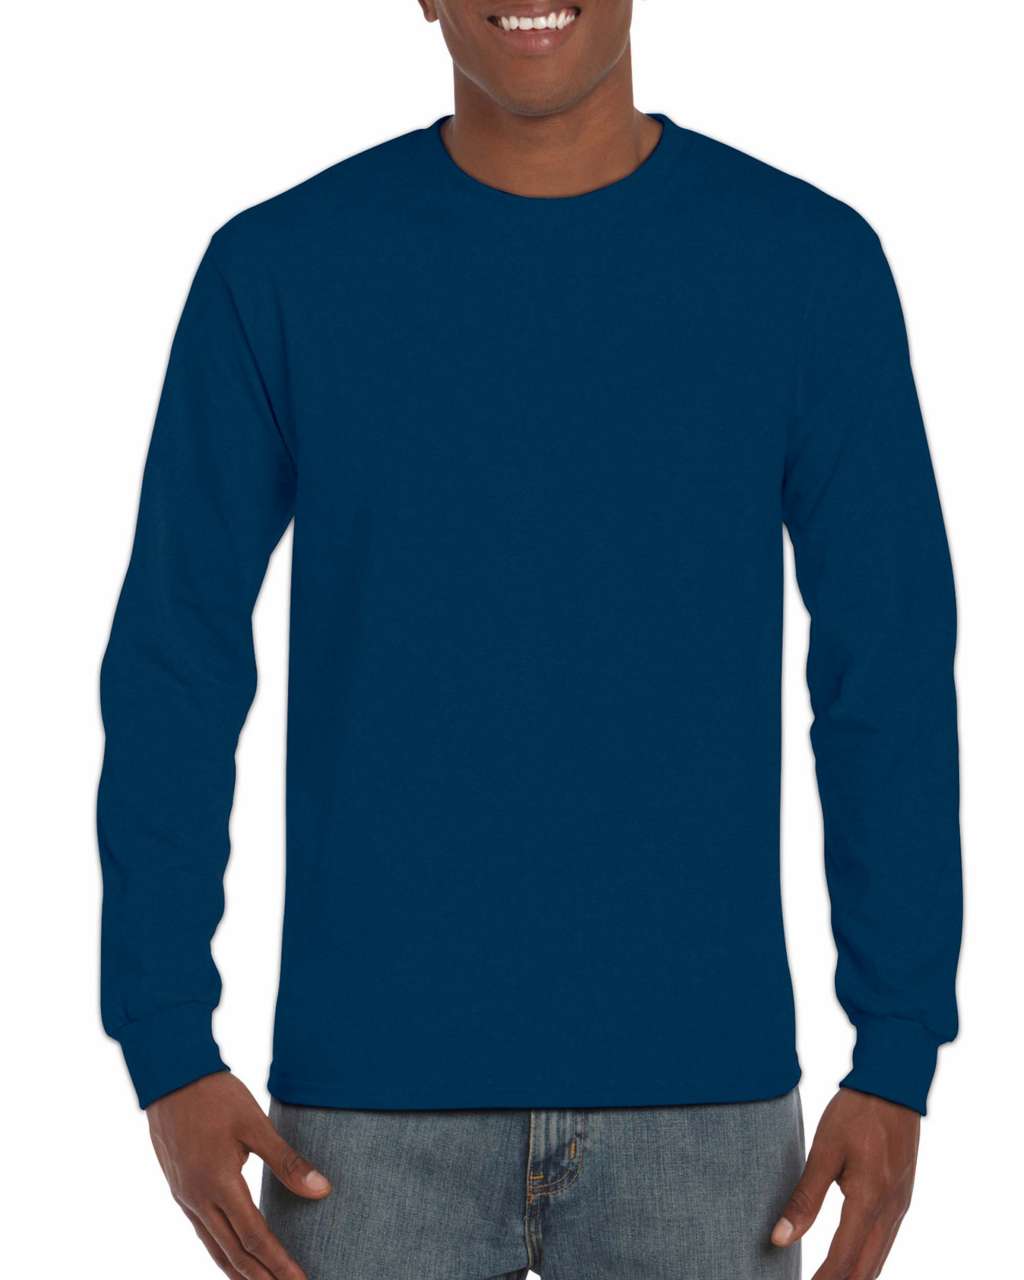 Gildan Hammer Adult Long Sleeve T-shirt - Gildan Hammer Adult Long Sleeve T-shirt - 